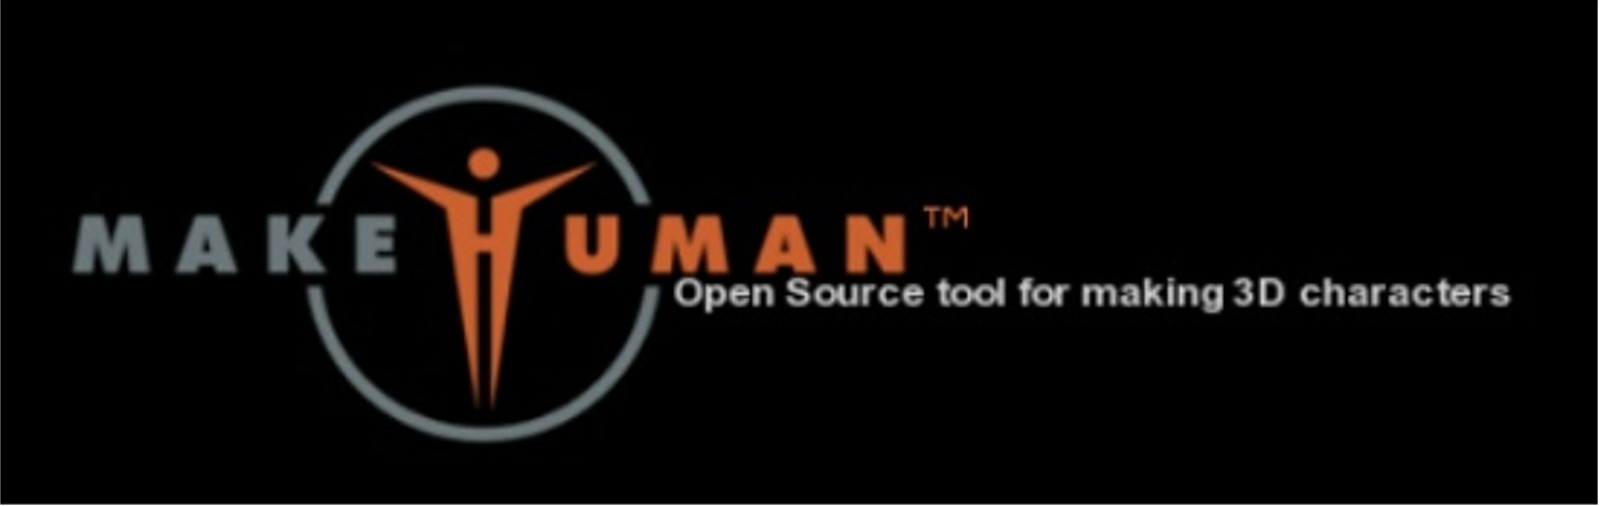 makehuman logo 2